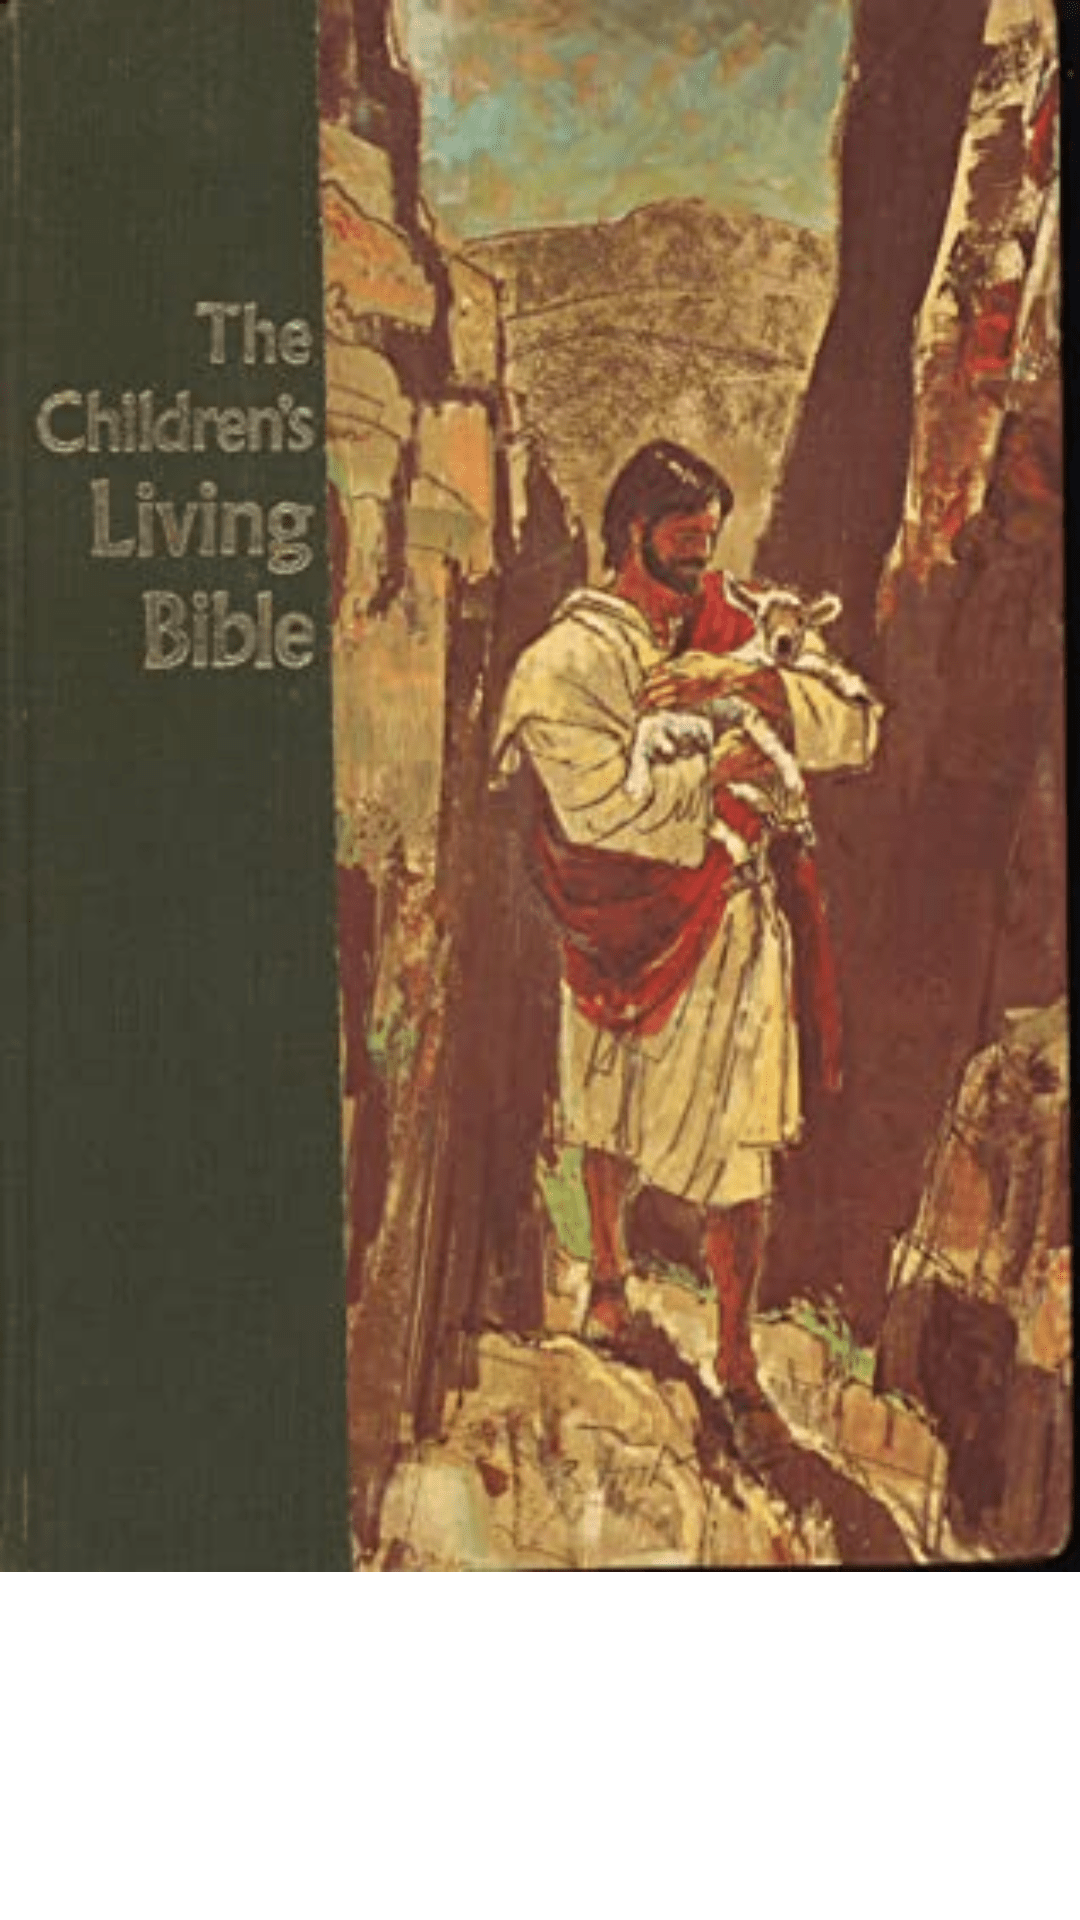 The Children's Living Bible